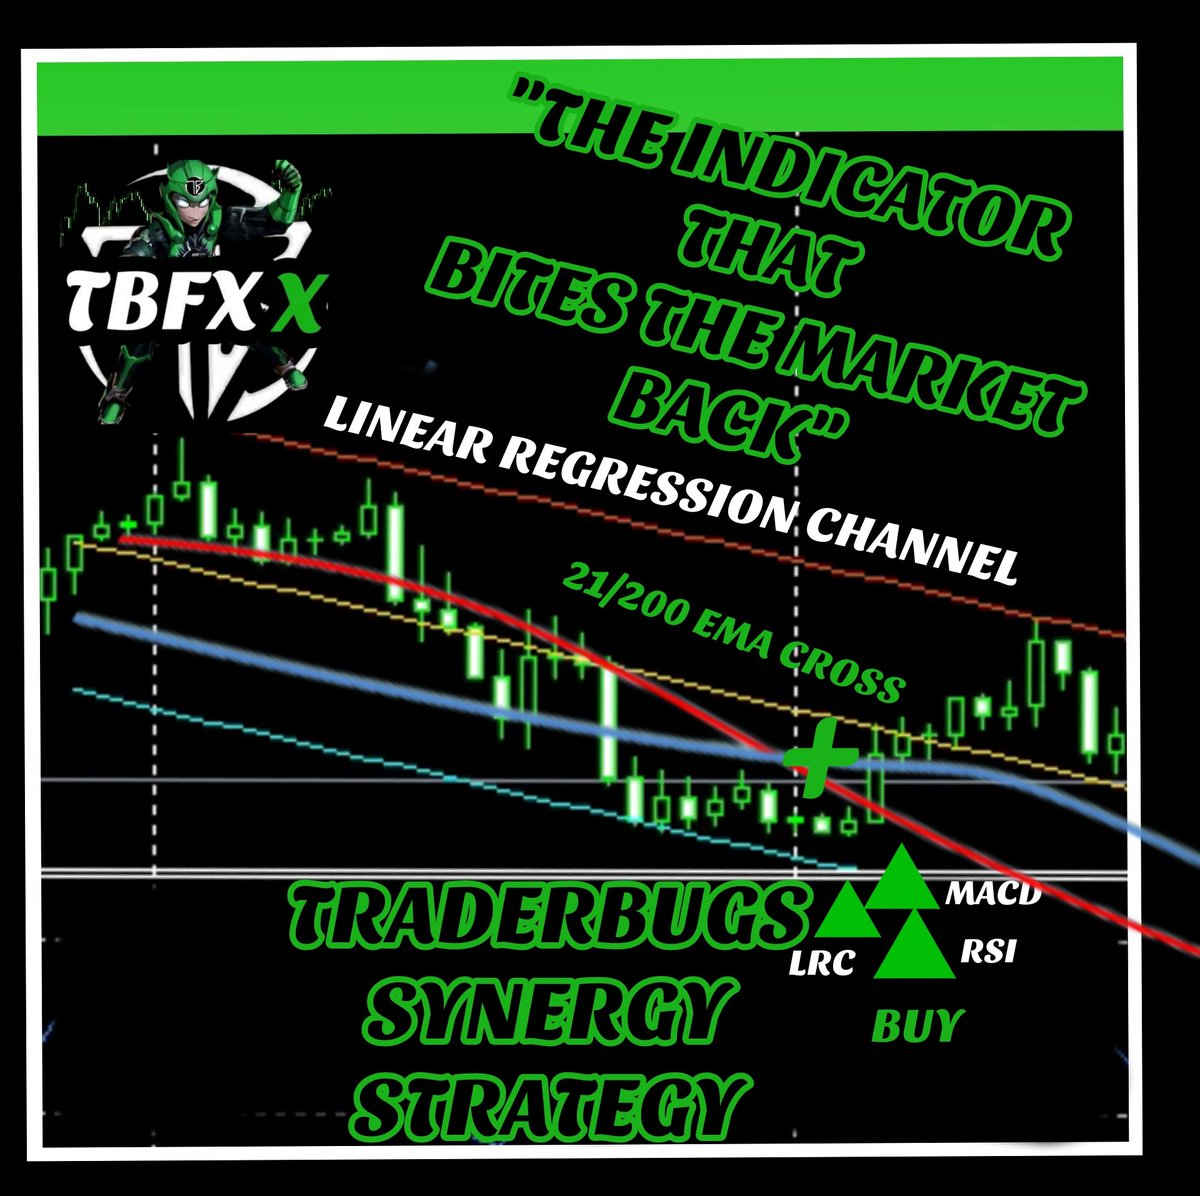 THE INDICATOR THAT BITES THE MARKET BACK' TRADERBUGS SYNERGY STRATEGY I
tradingview.com/script/ajzt3TY…
#CryptoInvestment #ForexProfits #MarketResearch #TradingTechniques #MoneyManagement #CryptoAssets #ForexMarkets 
#ProfitableTrades #SwingTradeSetup #TradingResources #TradingExpertise